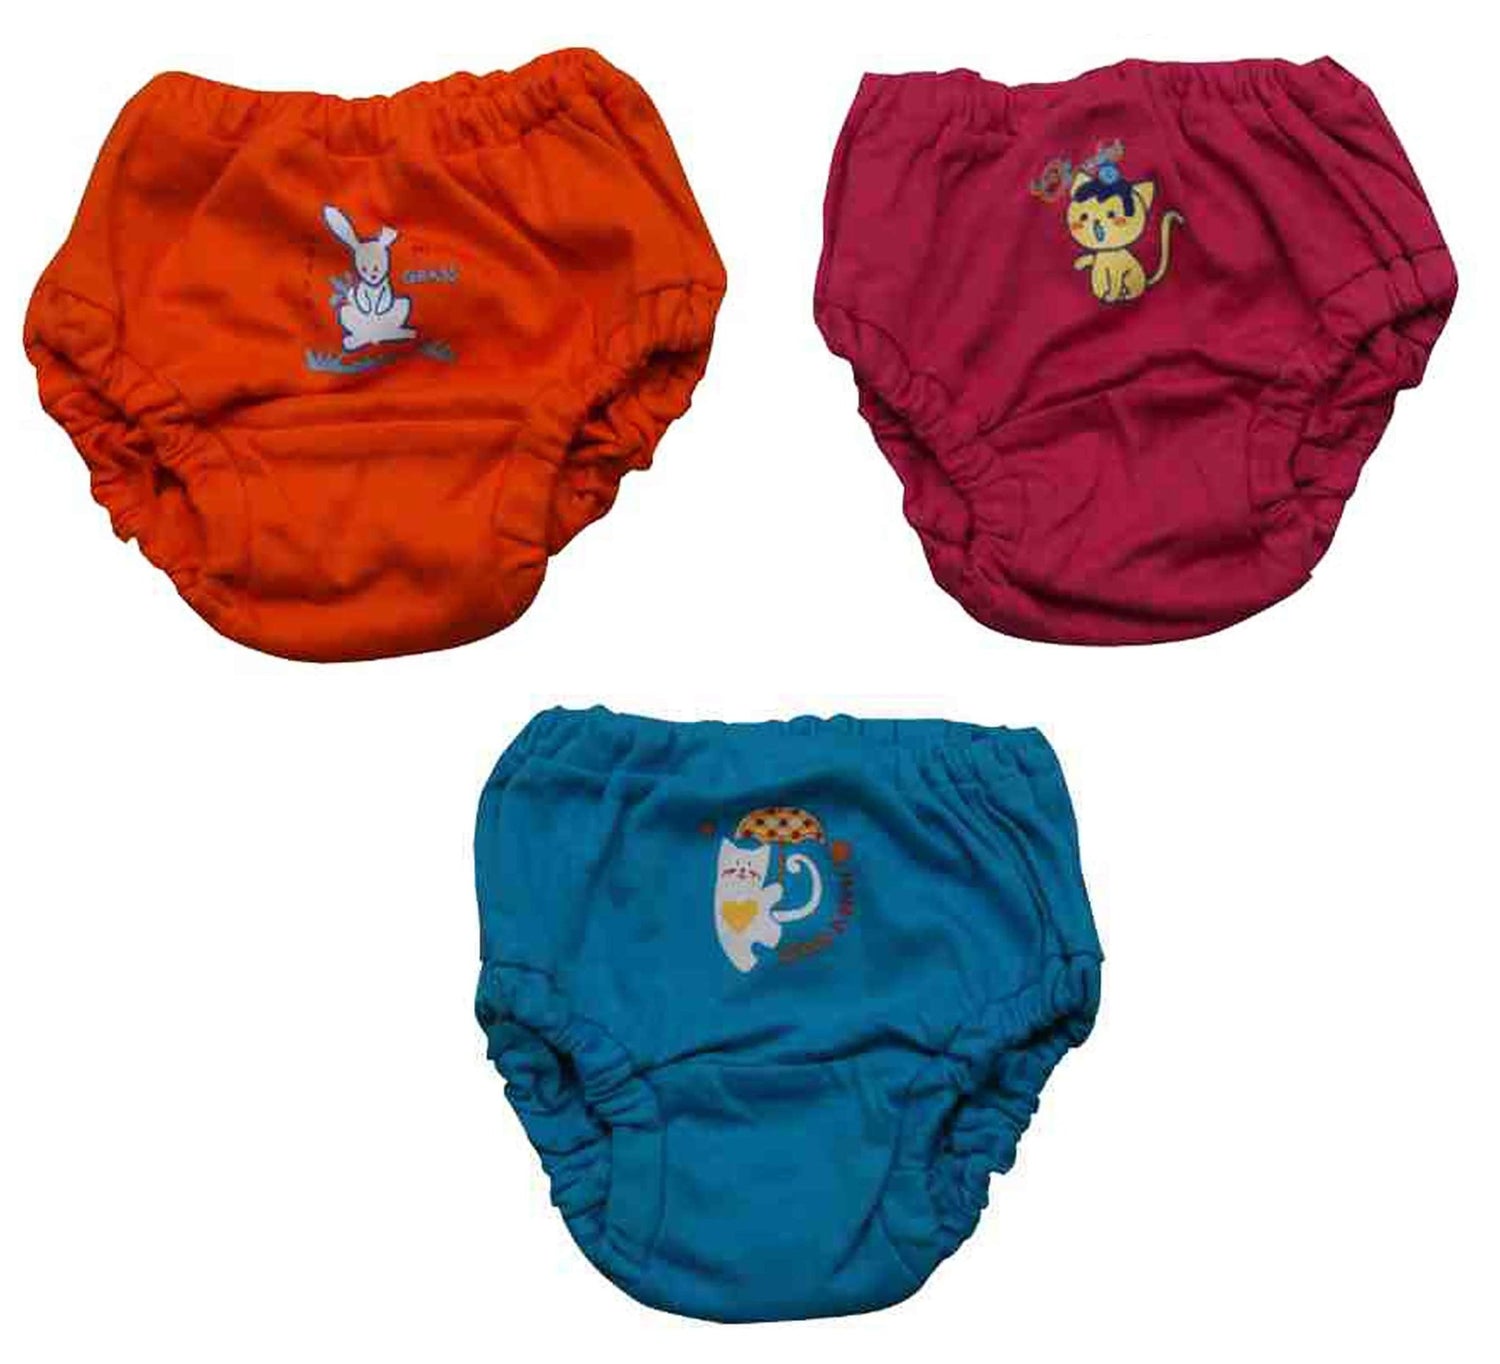 Newborn baby boys & baby girls pure soft cotton panties pack of 3 pcs. - FAVISM